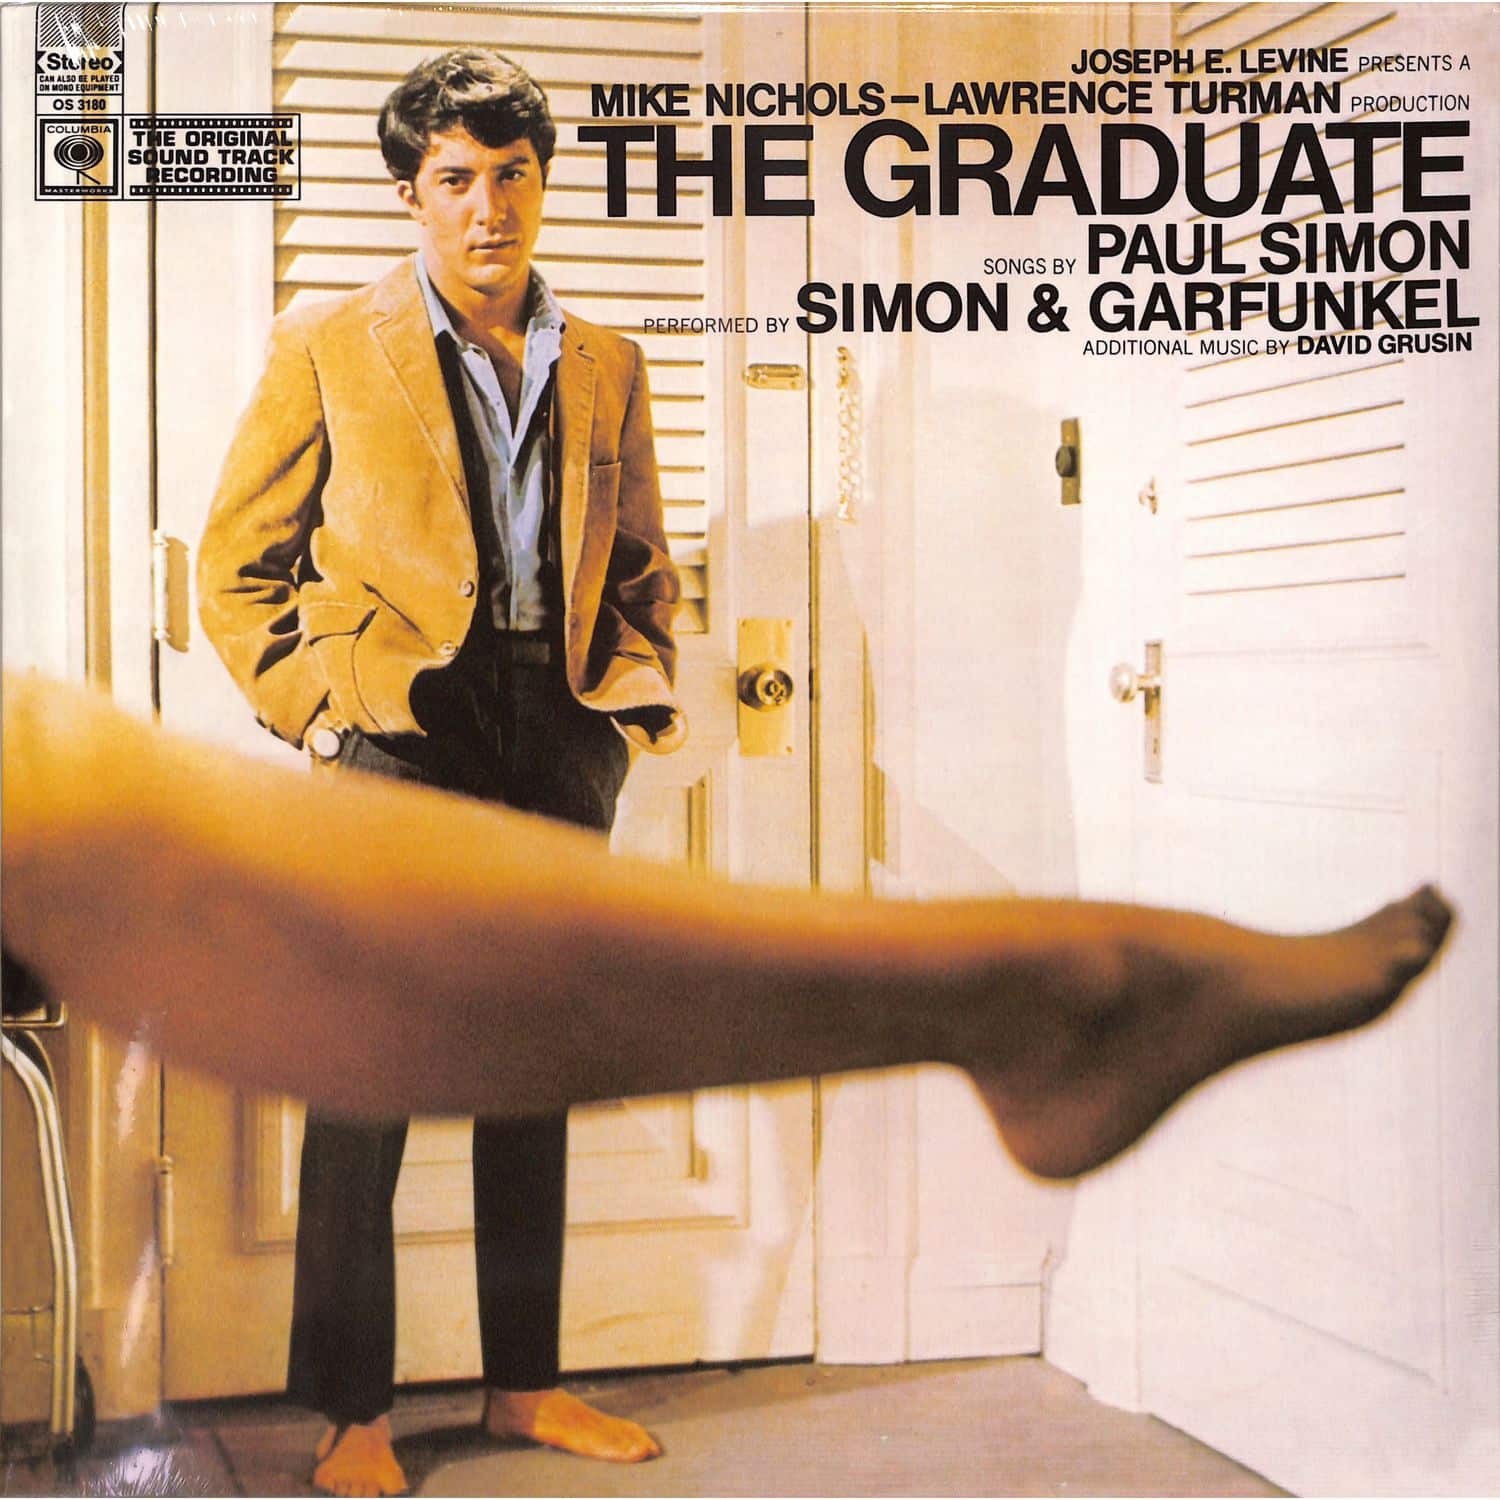 Simon & Garfunkel / Dave Grusin - THE GRADUATE O.S.T. 